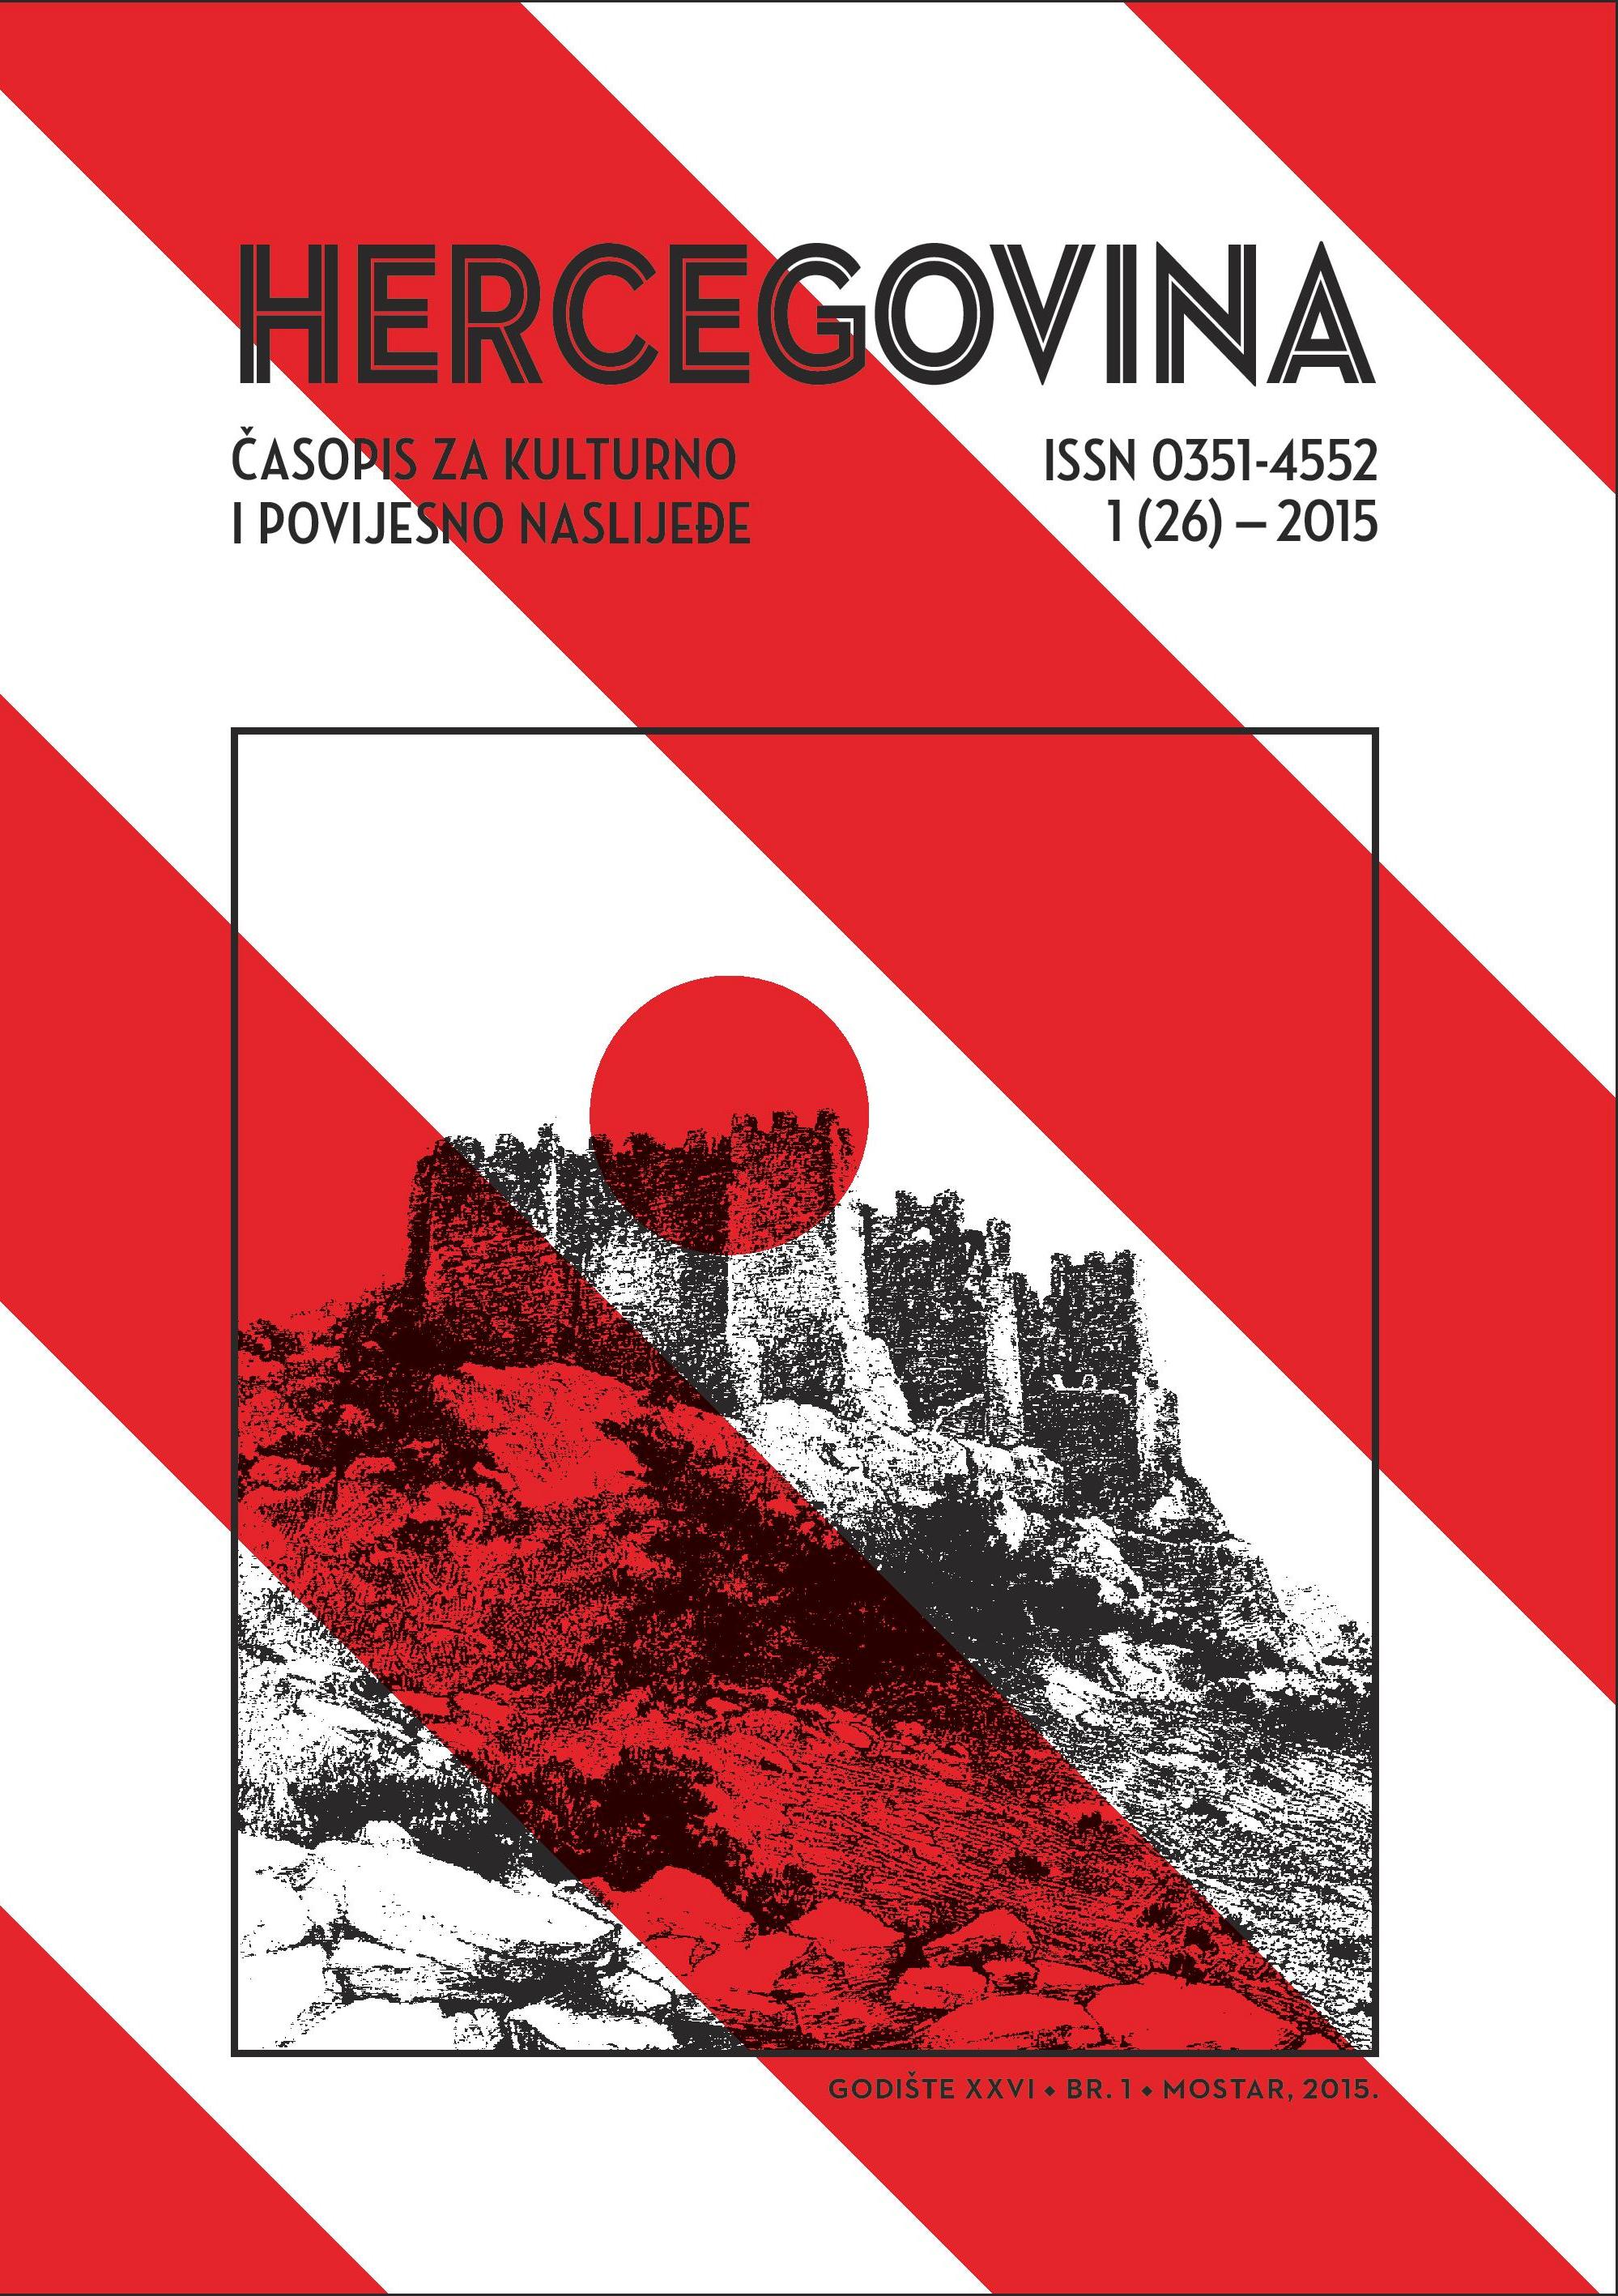 Austro-Hungarian forts in Herzegovina
Defensive line: Kalinovik, Ulog-Obrnja, Nevesinje, Stolac (die zweite linie) Cover Image